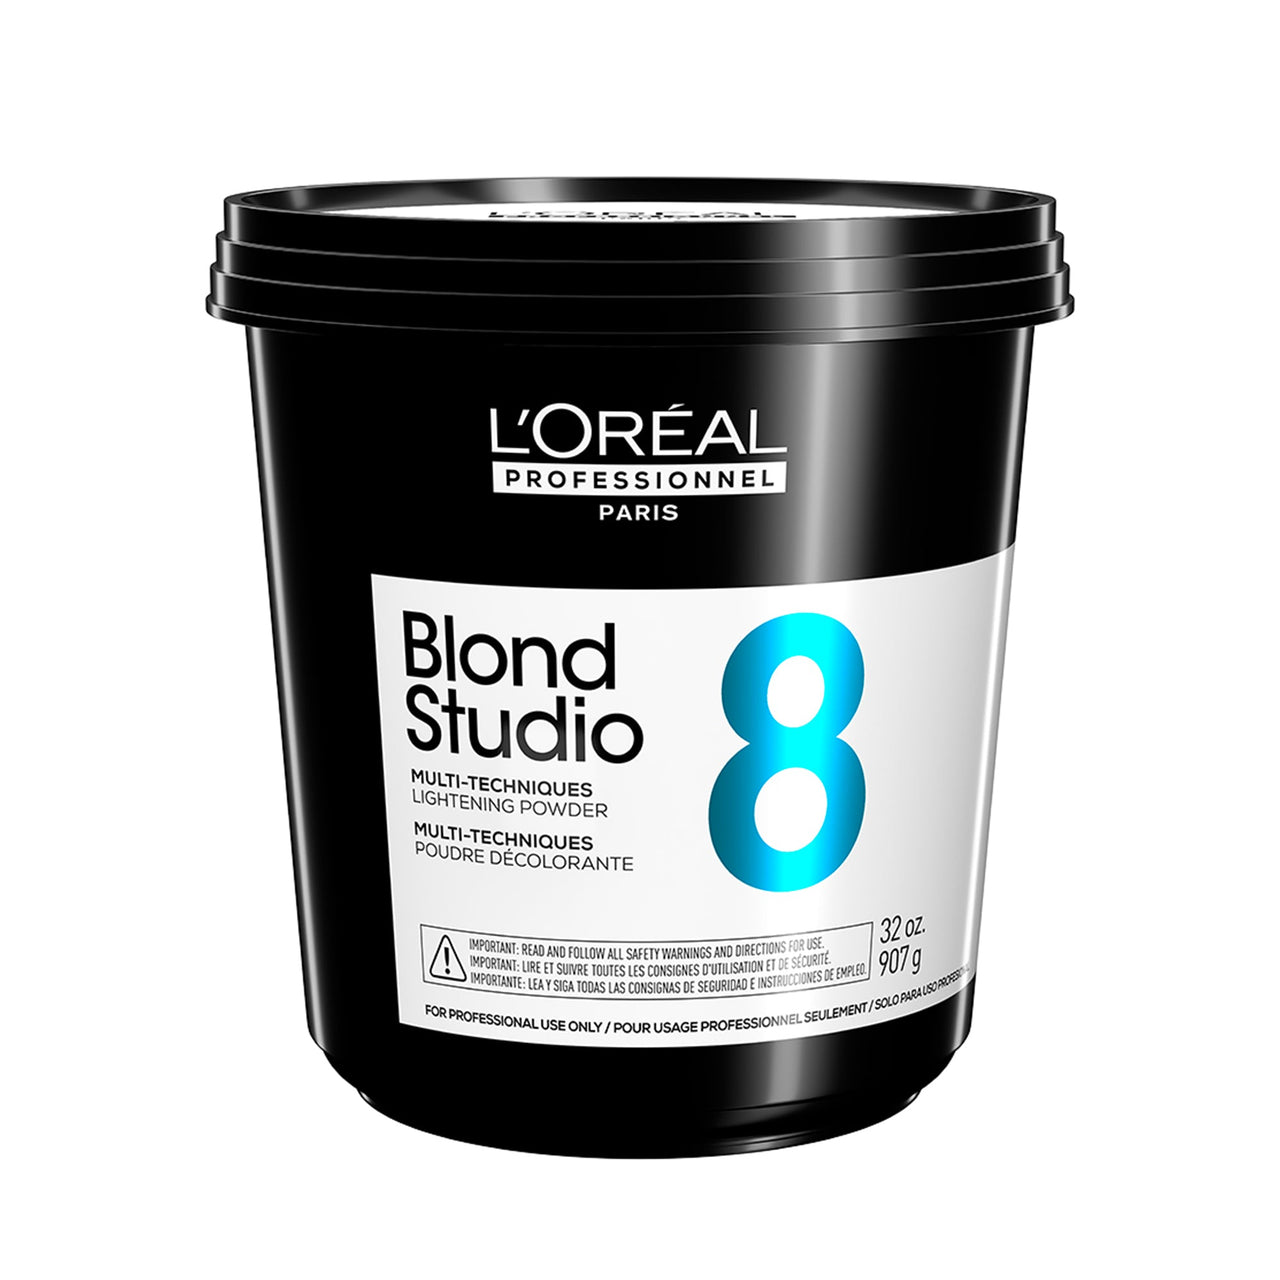 L'OREAL - BLOND STUDIO_Blond Studio 8 Multi-Techniques Lightening Powder 907g / 32oz_Cosmetic World